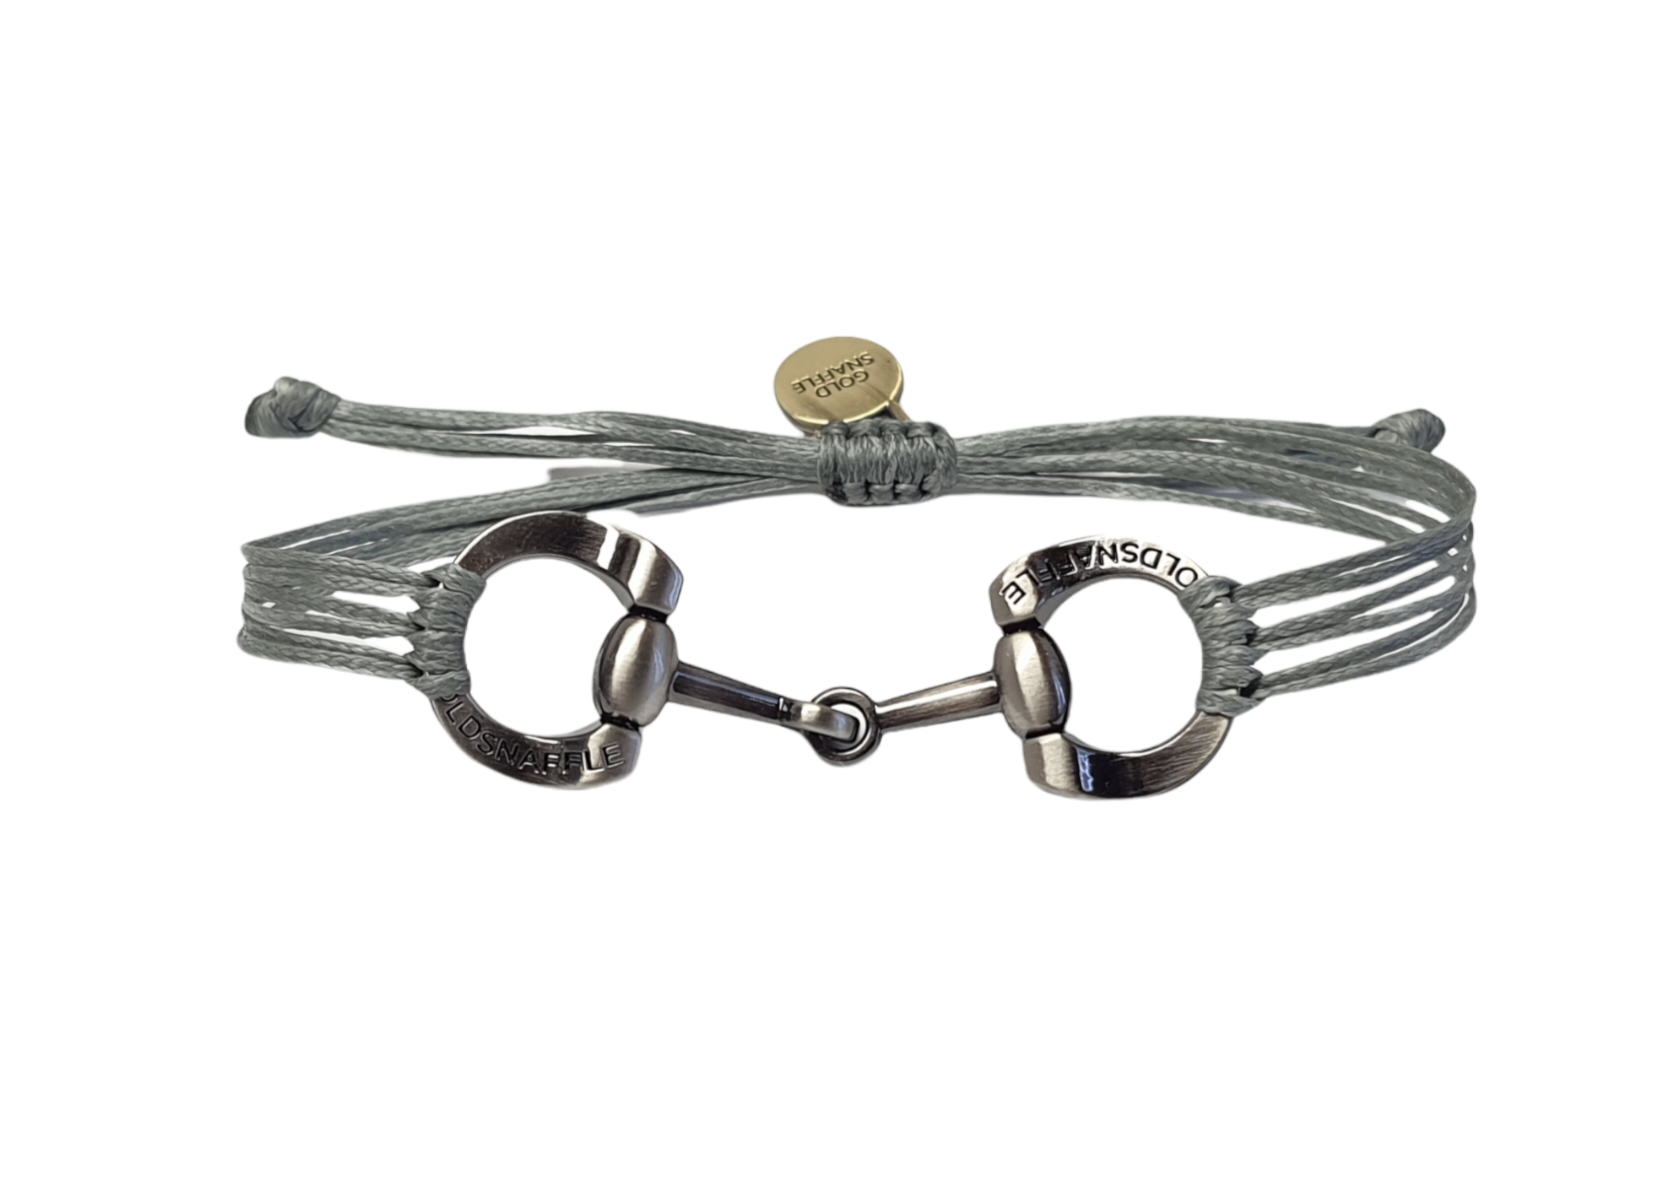 brushed silver horse bit snaffle bracelet in leather string